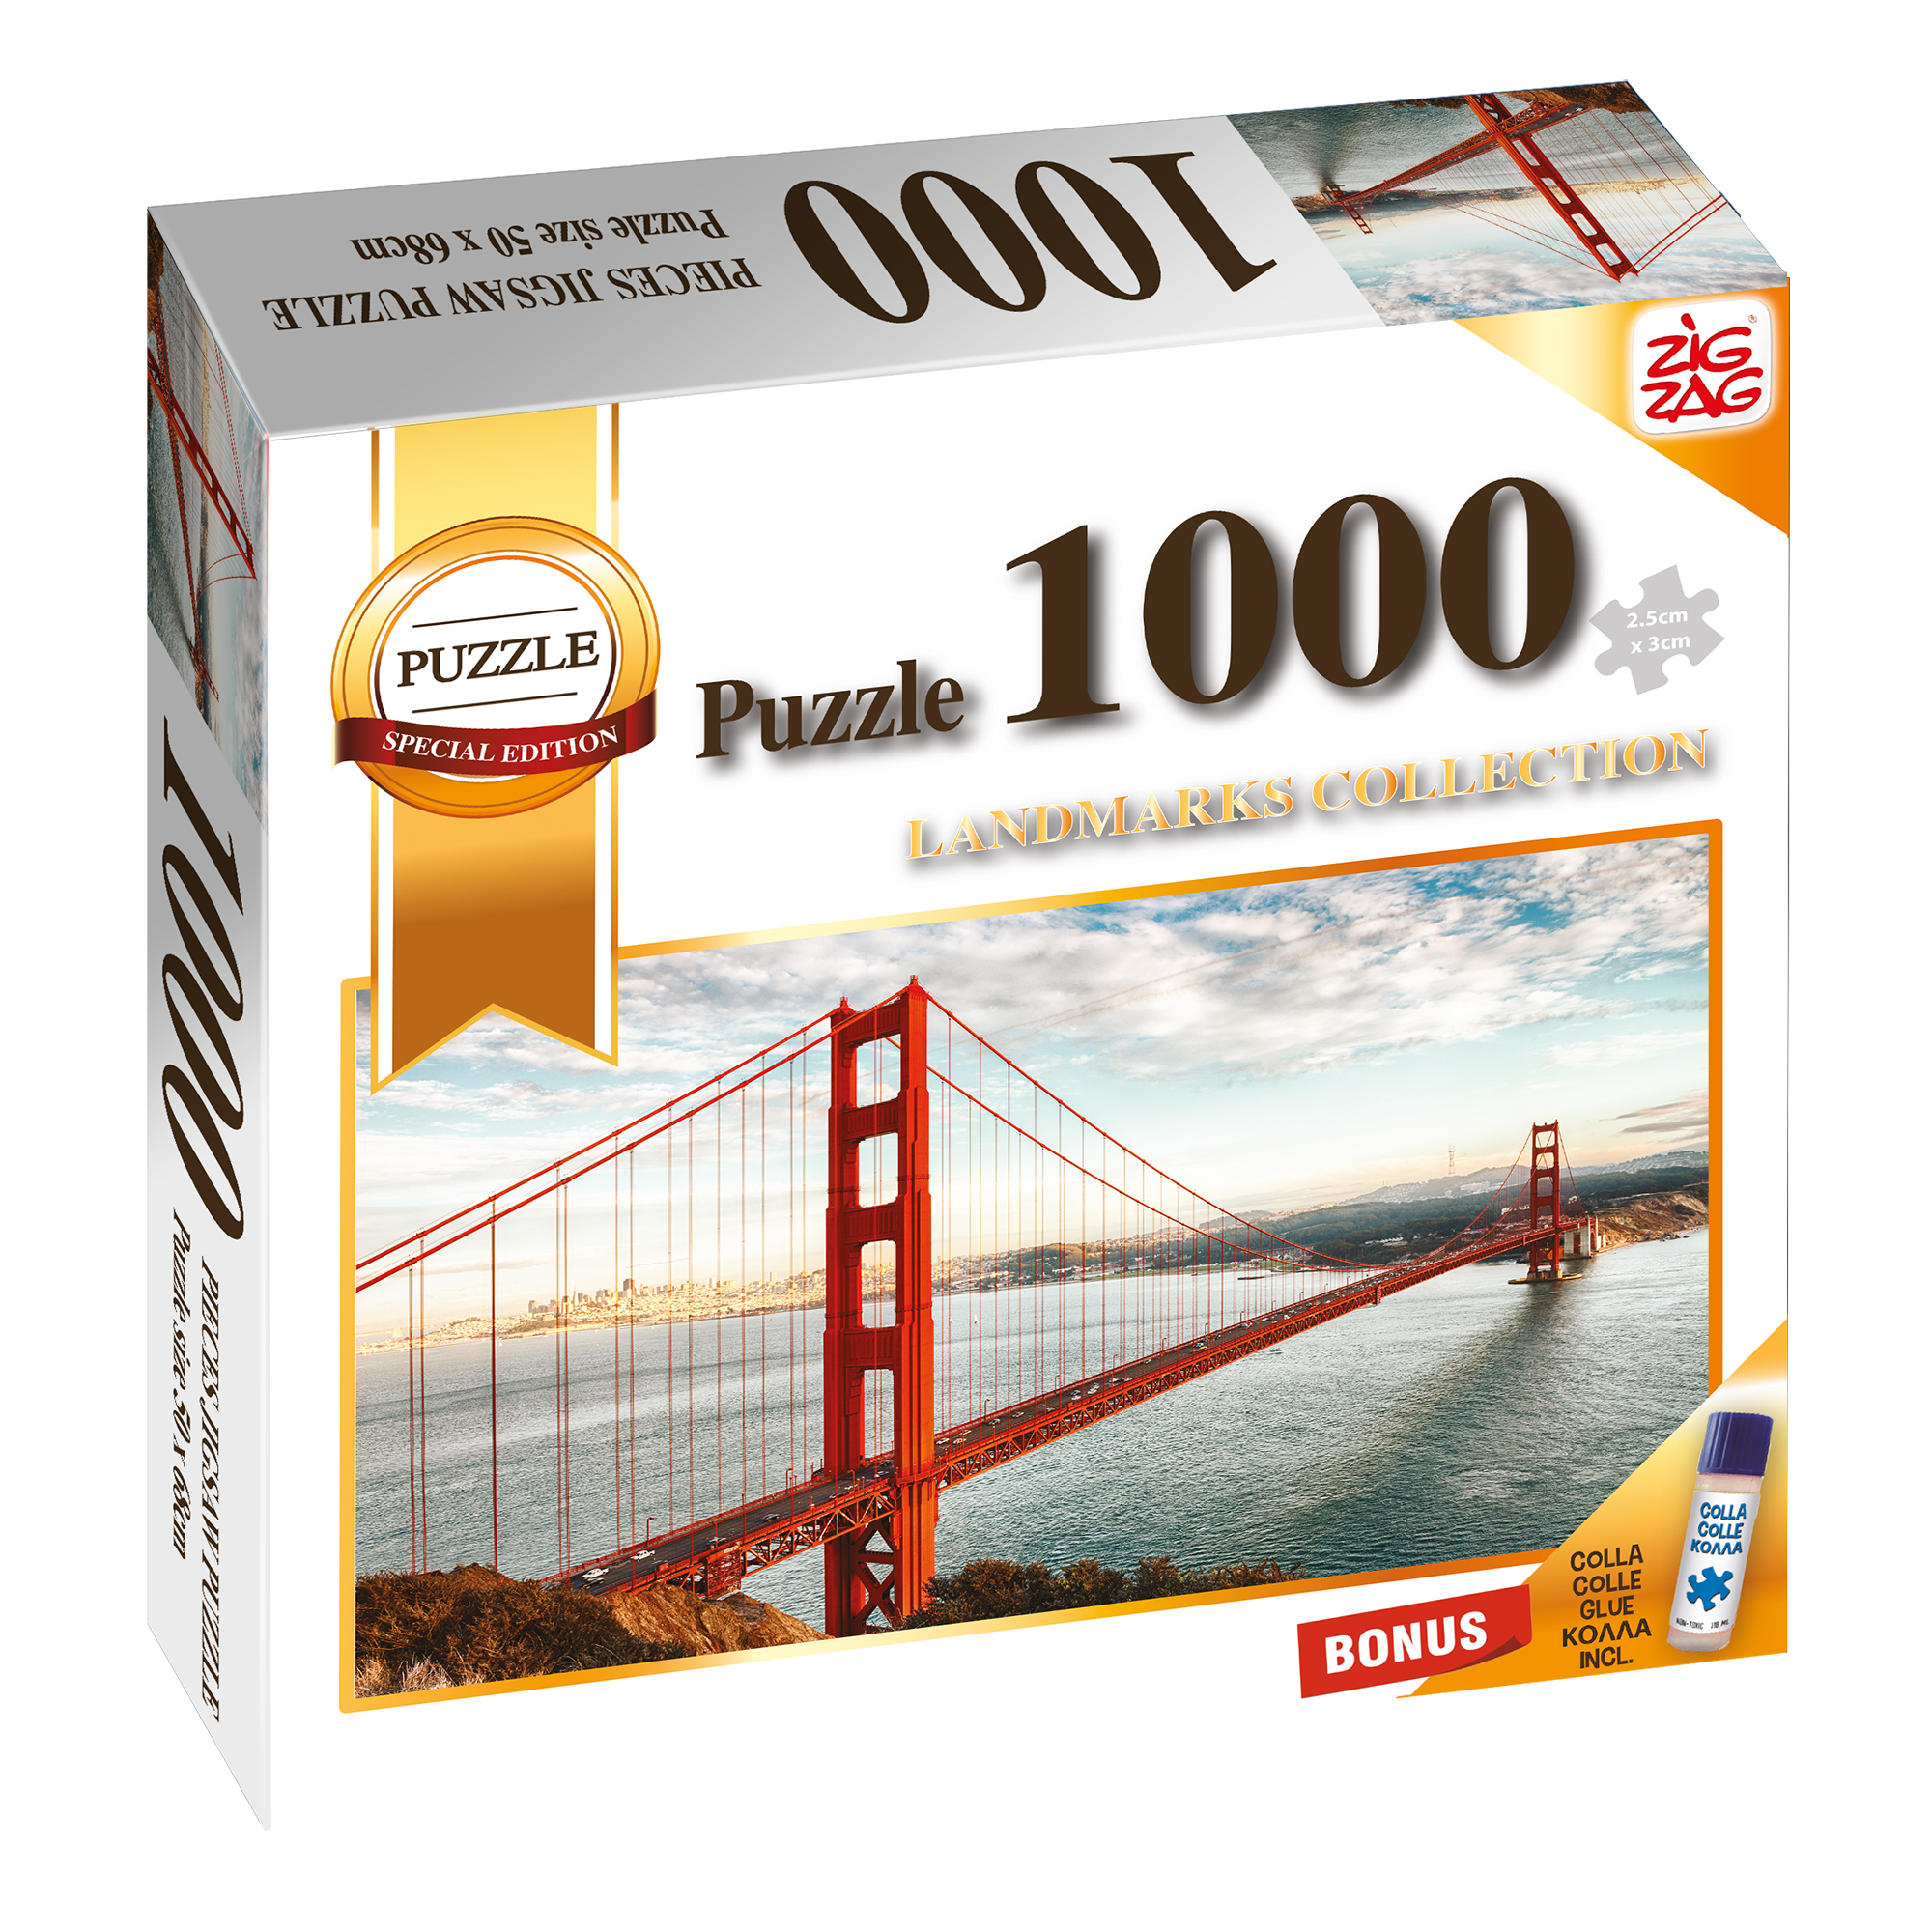 Puzzle golden gate bridge - 1000 pz - ZIG ZAG